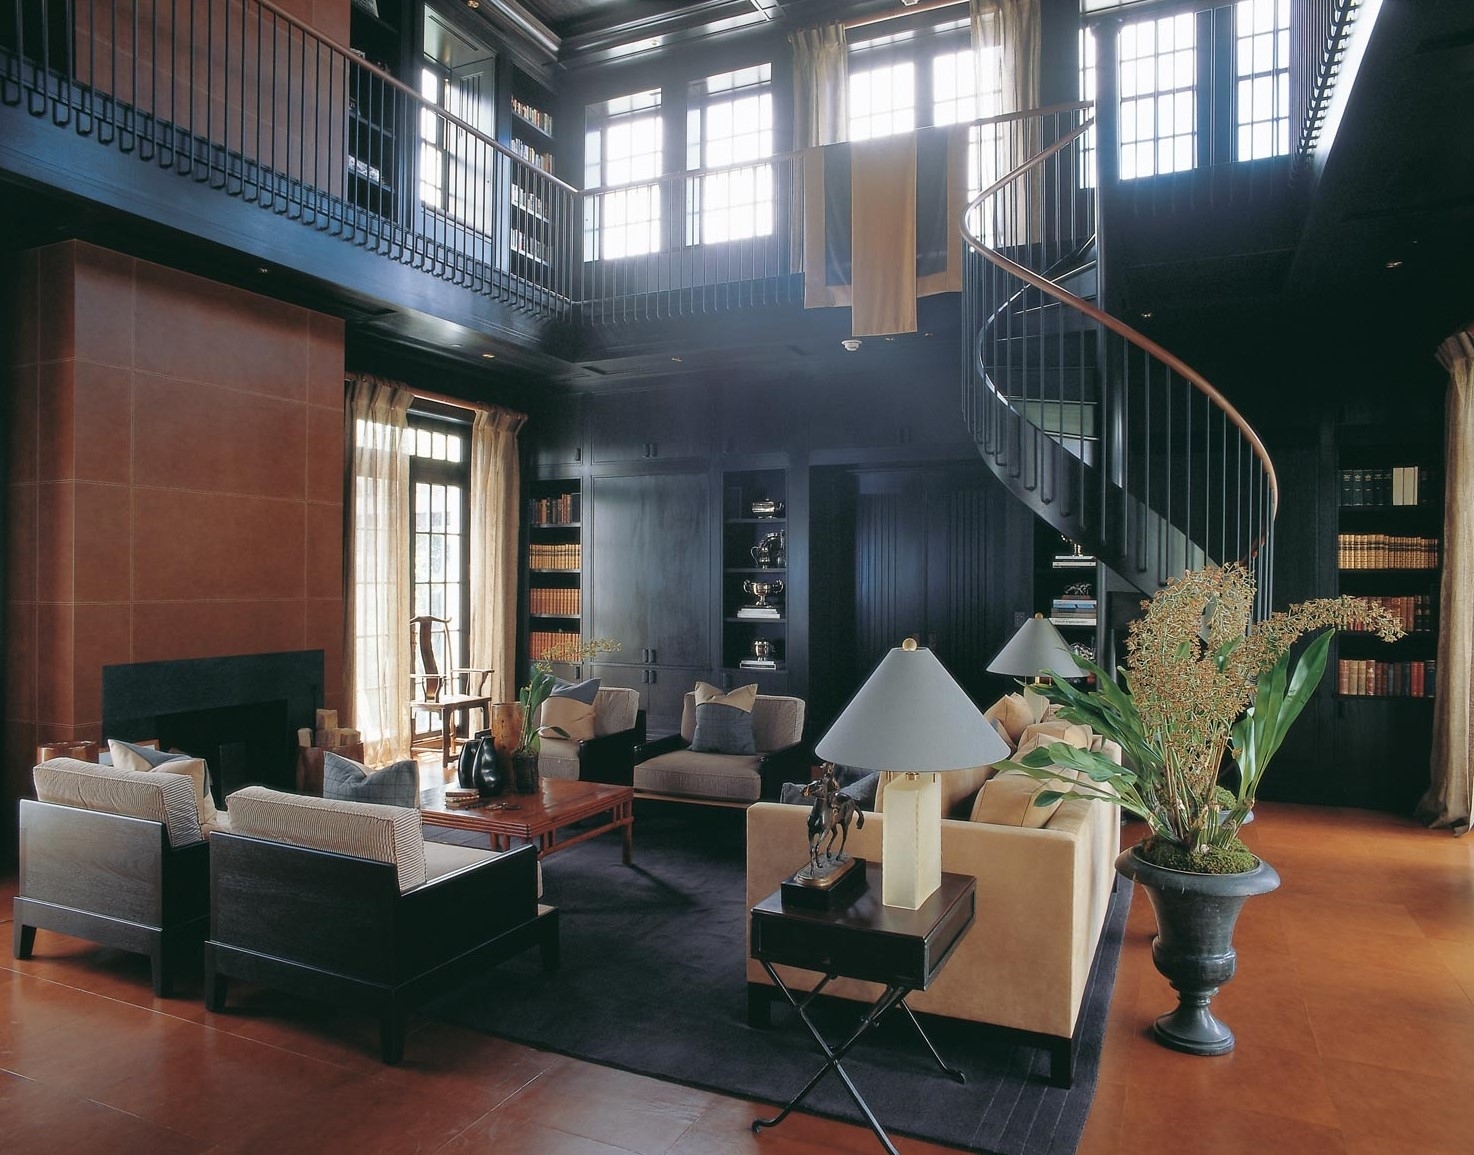 Best Classic Interior Design For Home